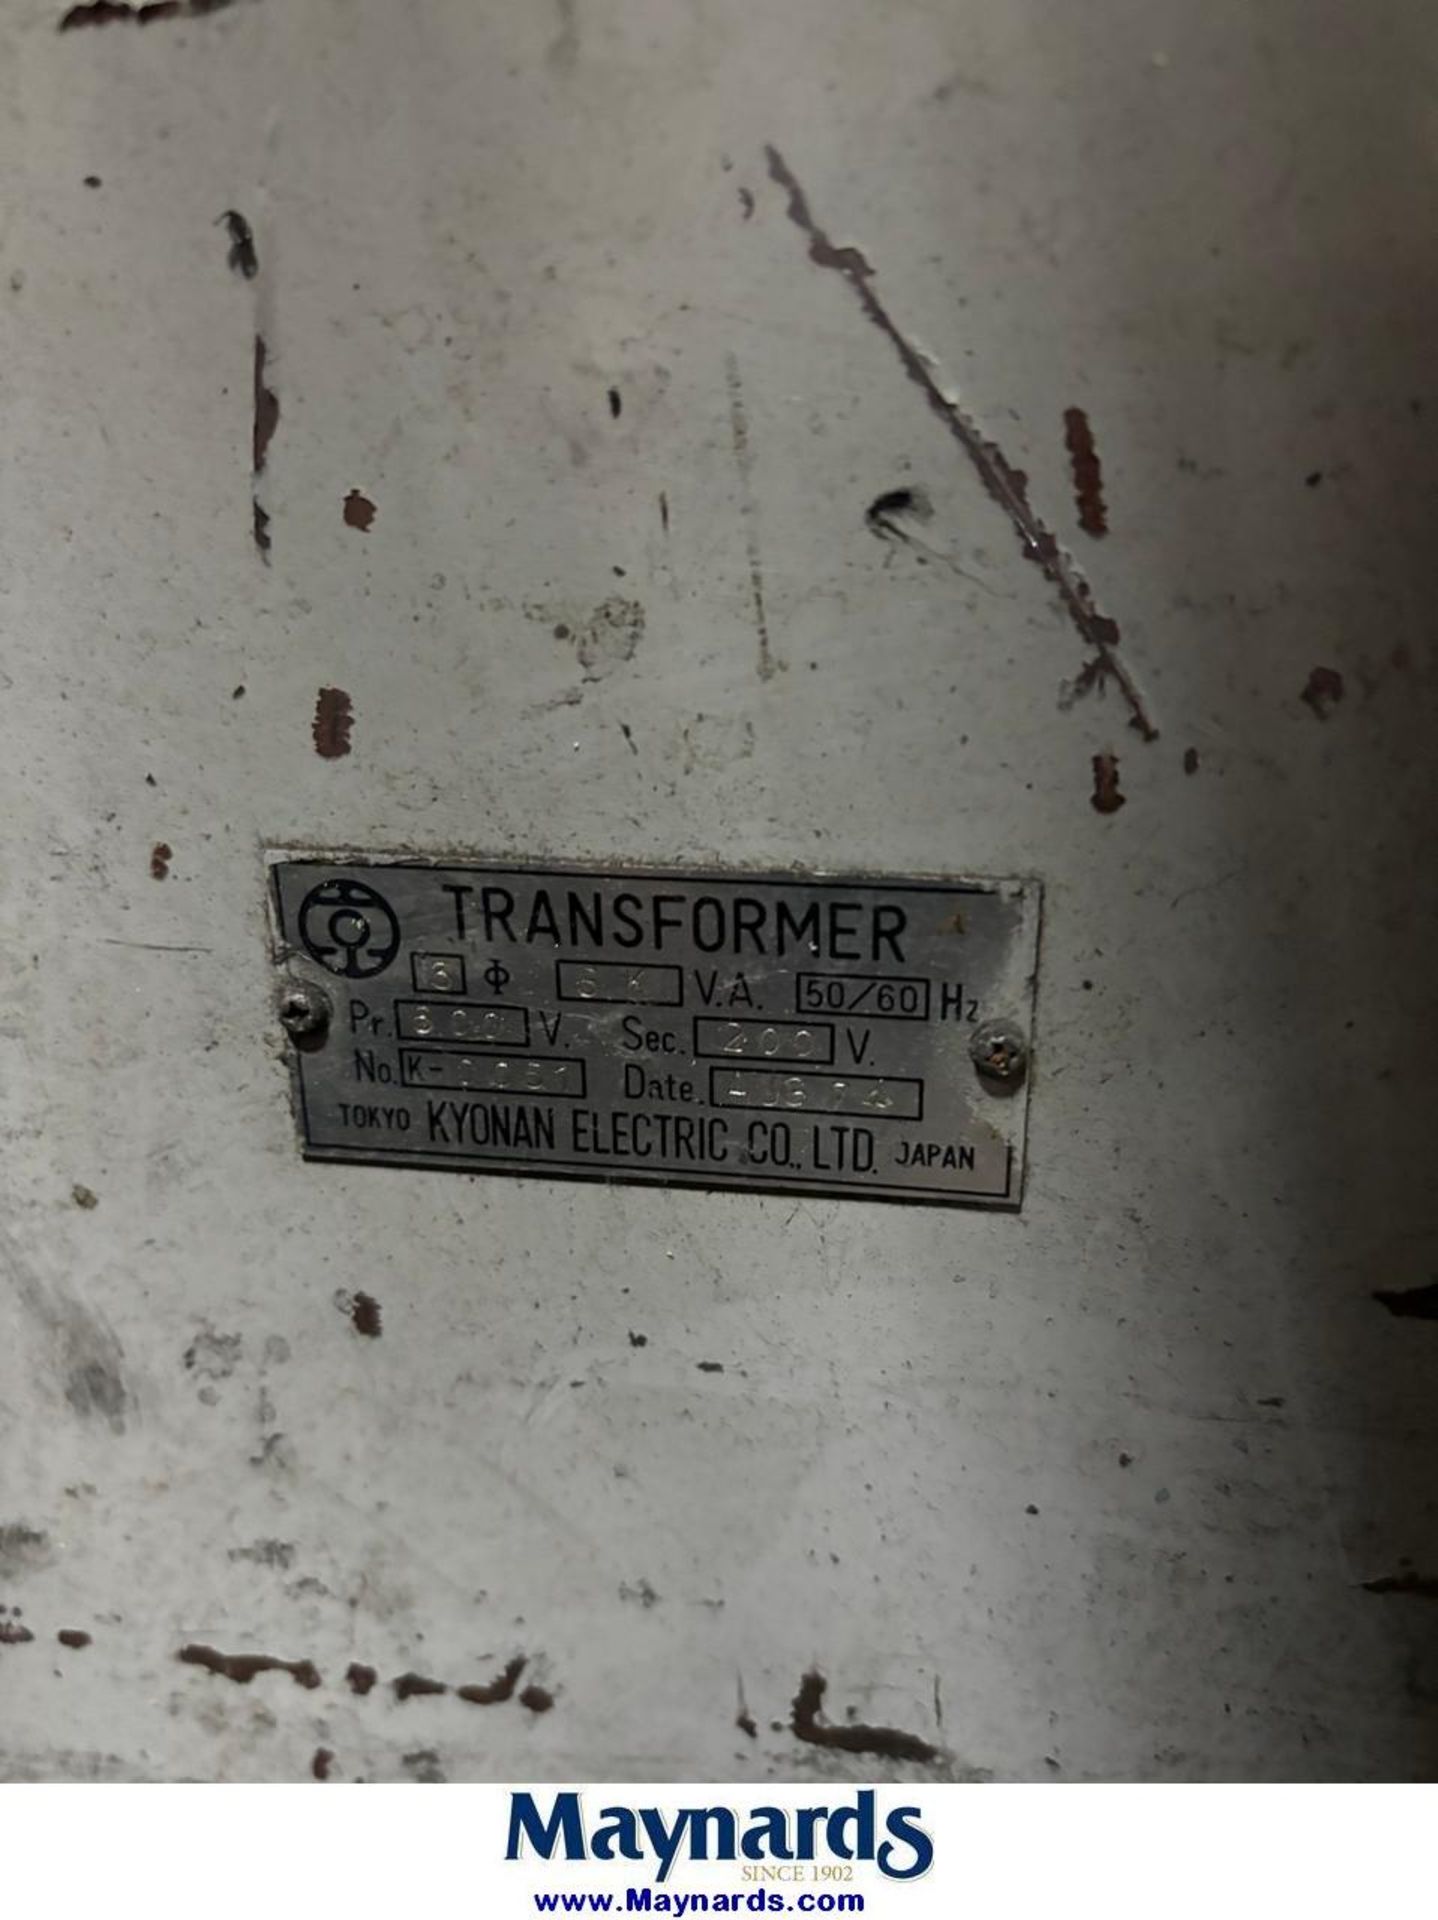 Transformer - Image 2 of 2